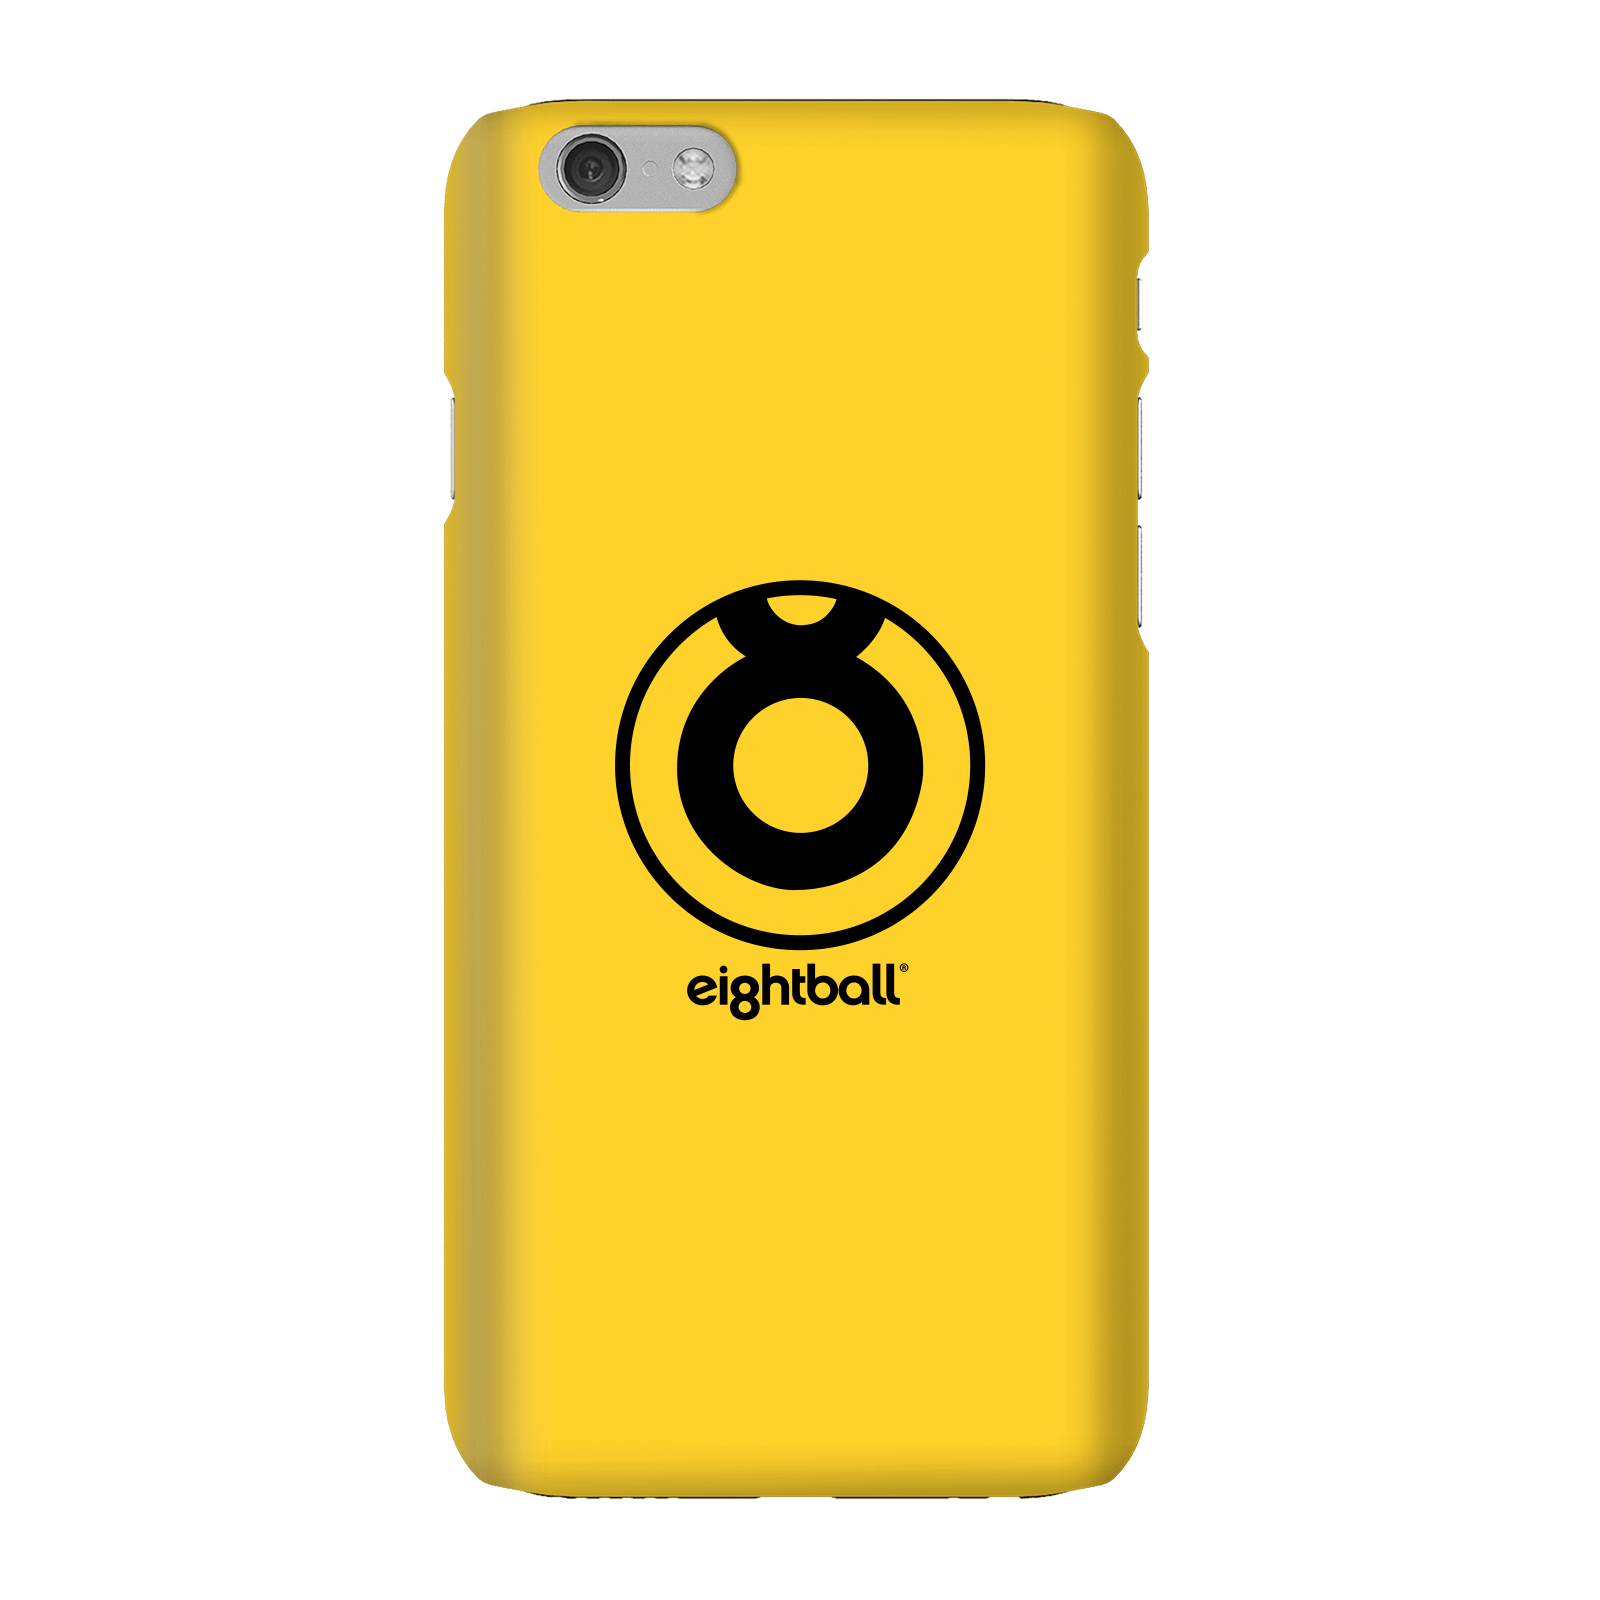 Funda Móvil Ei8htball Large Circle Logo para iPhone y Android - iPhone 6 - Carcasa rígida - Mate